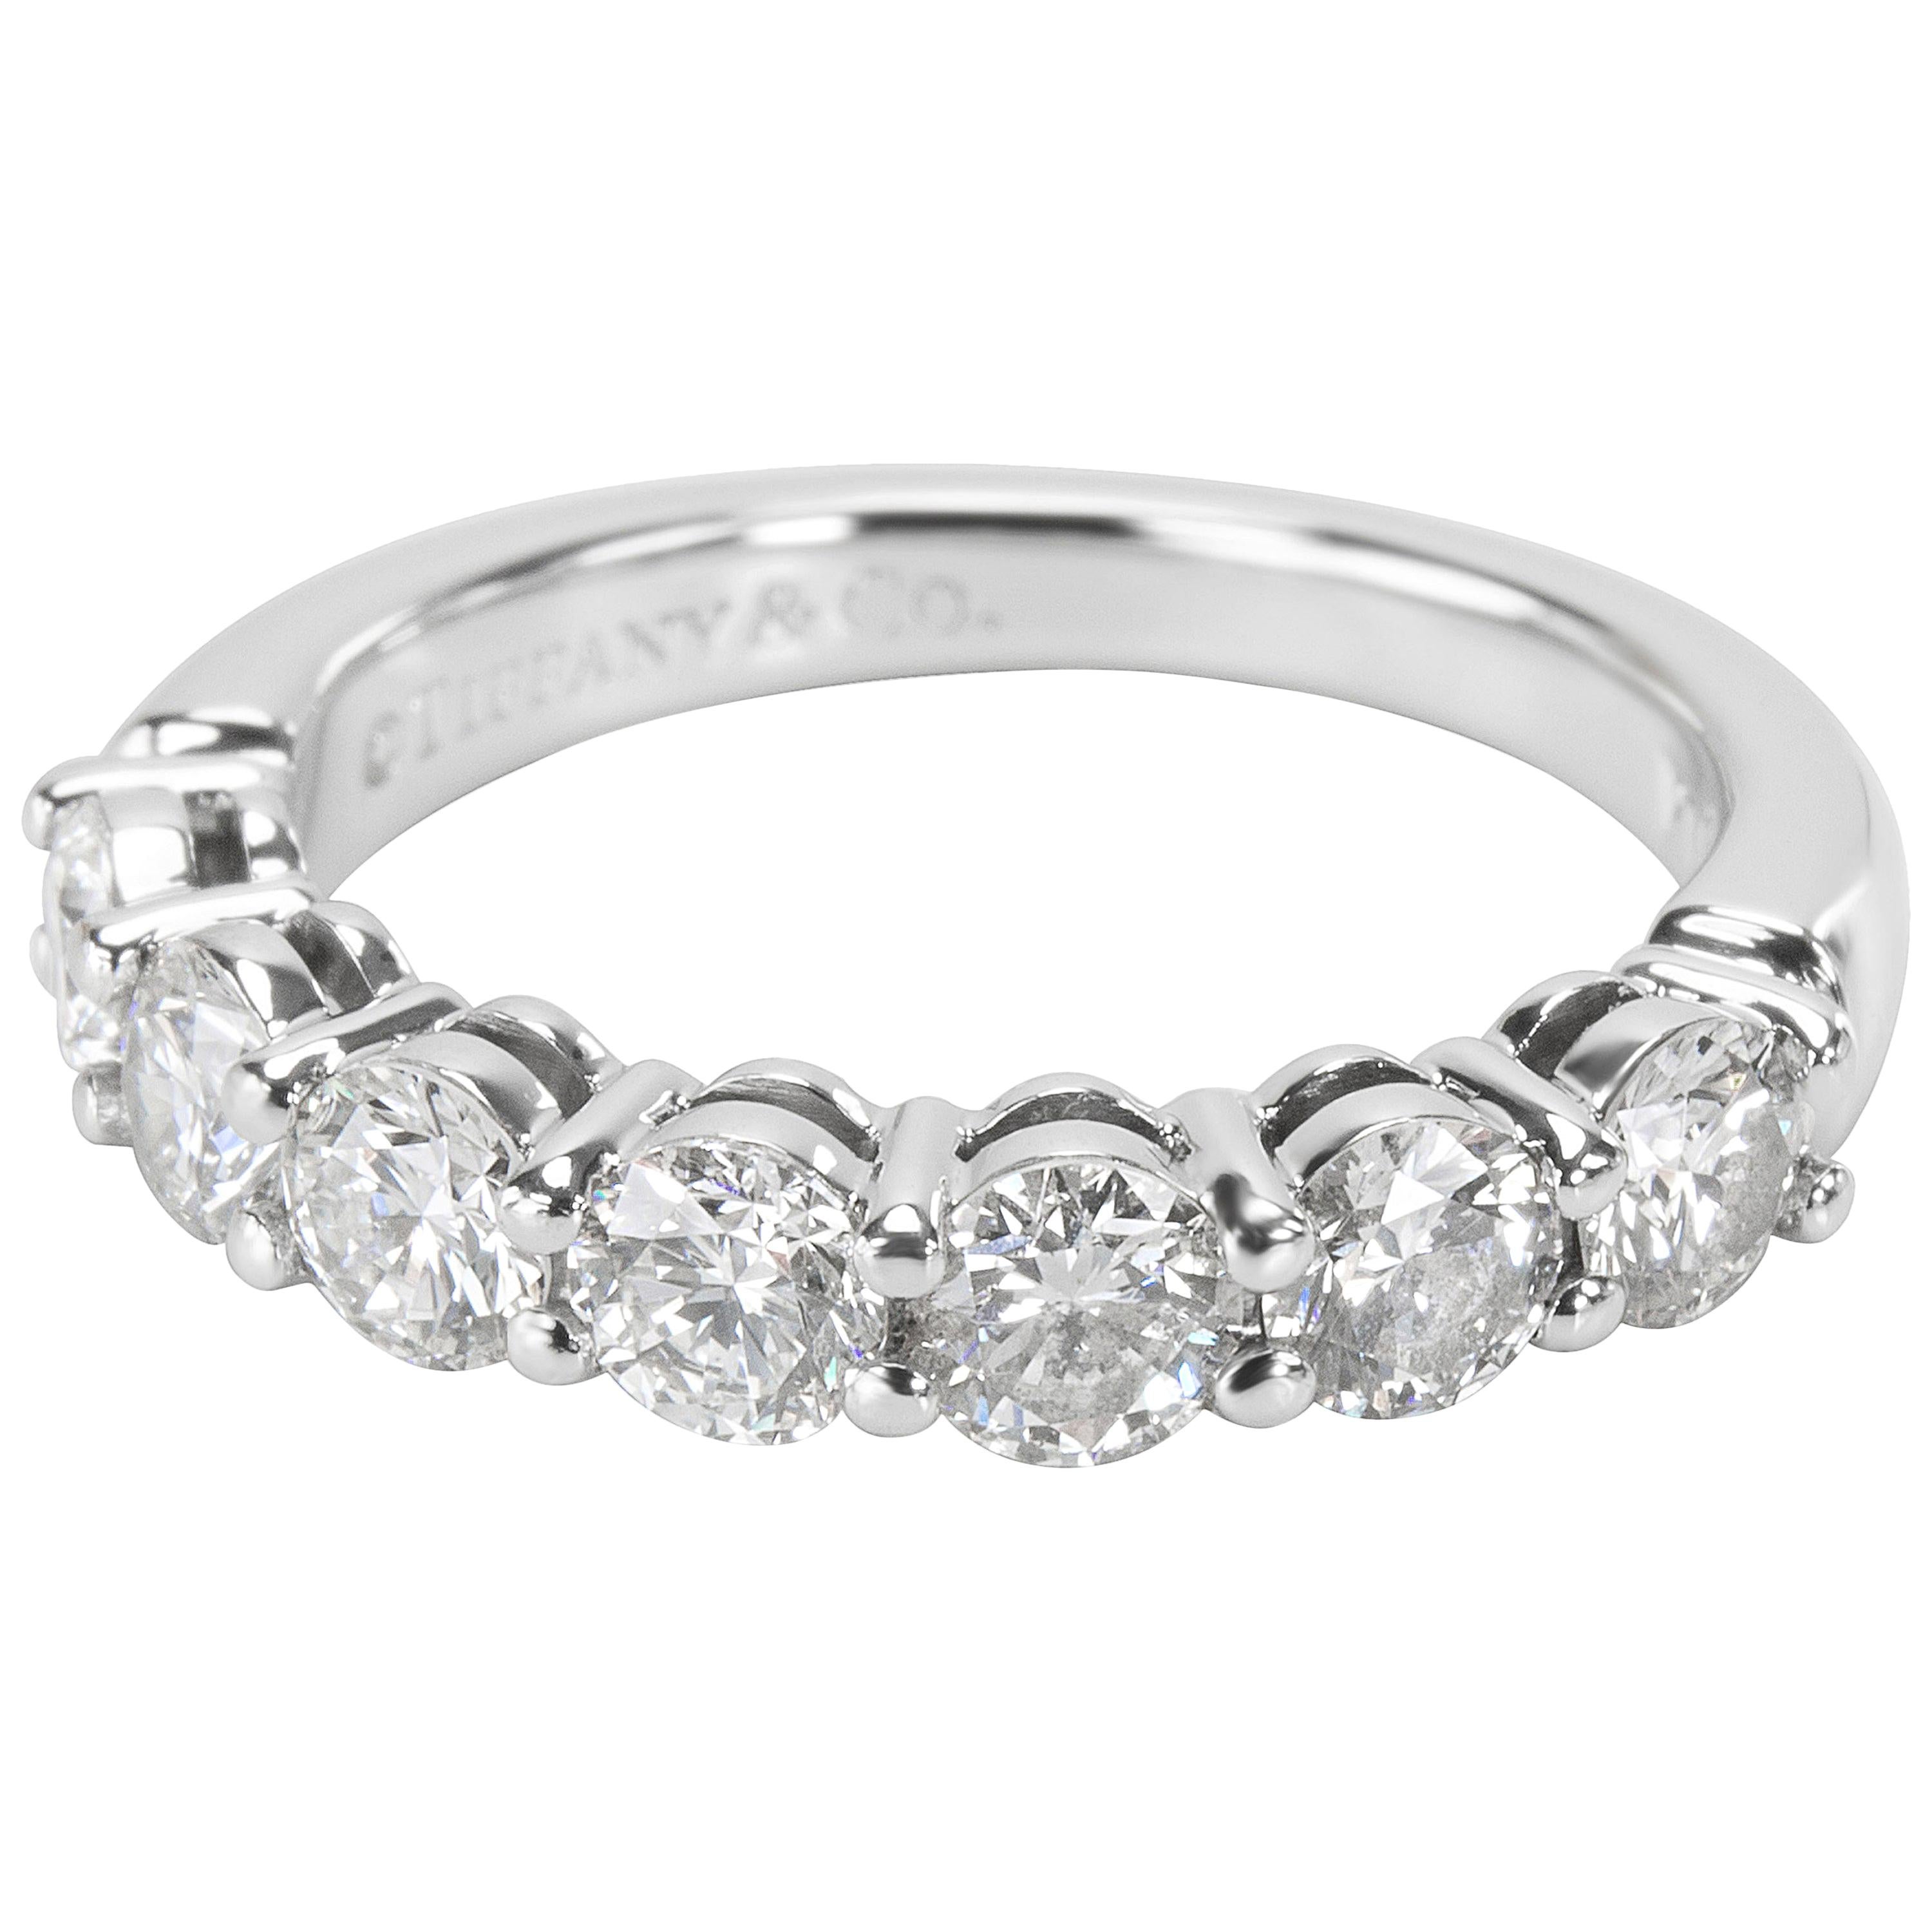 Tiffany & Co. Embrace Diamond Wedding Band in Platinum '0.91 Carat'